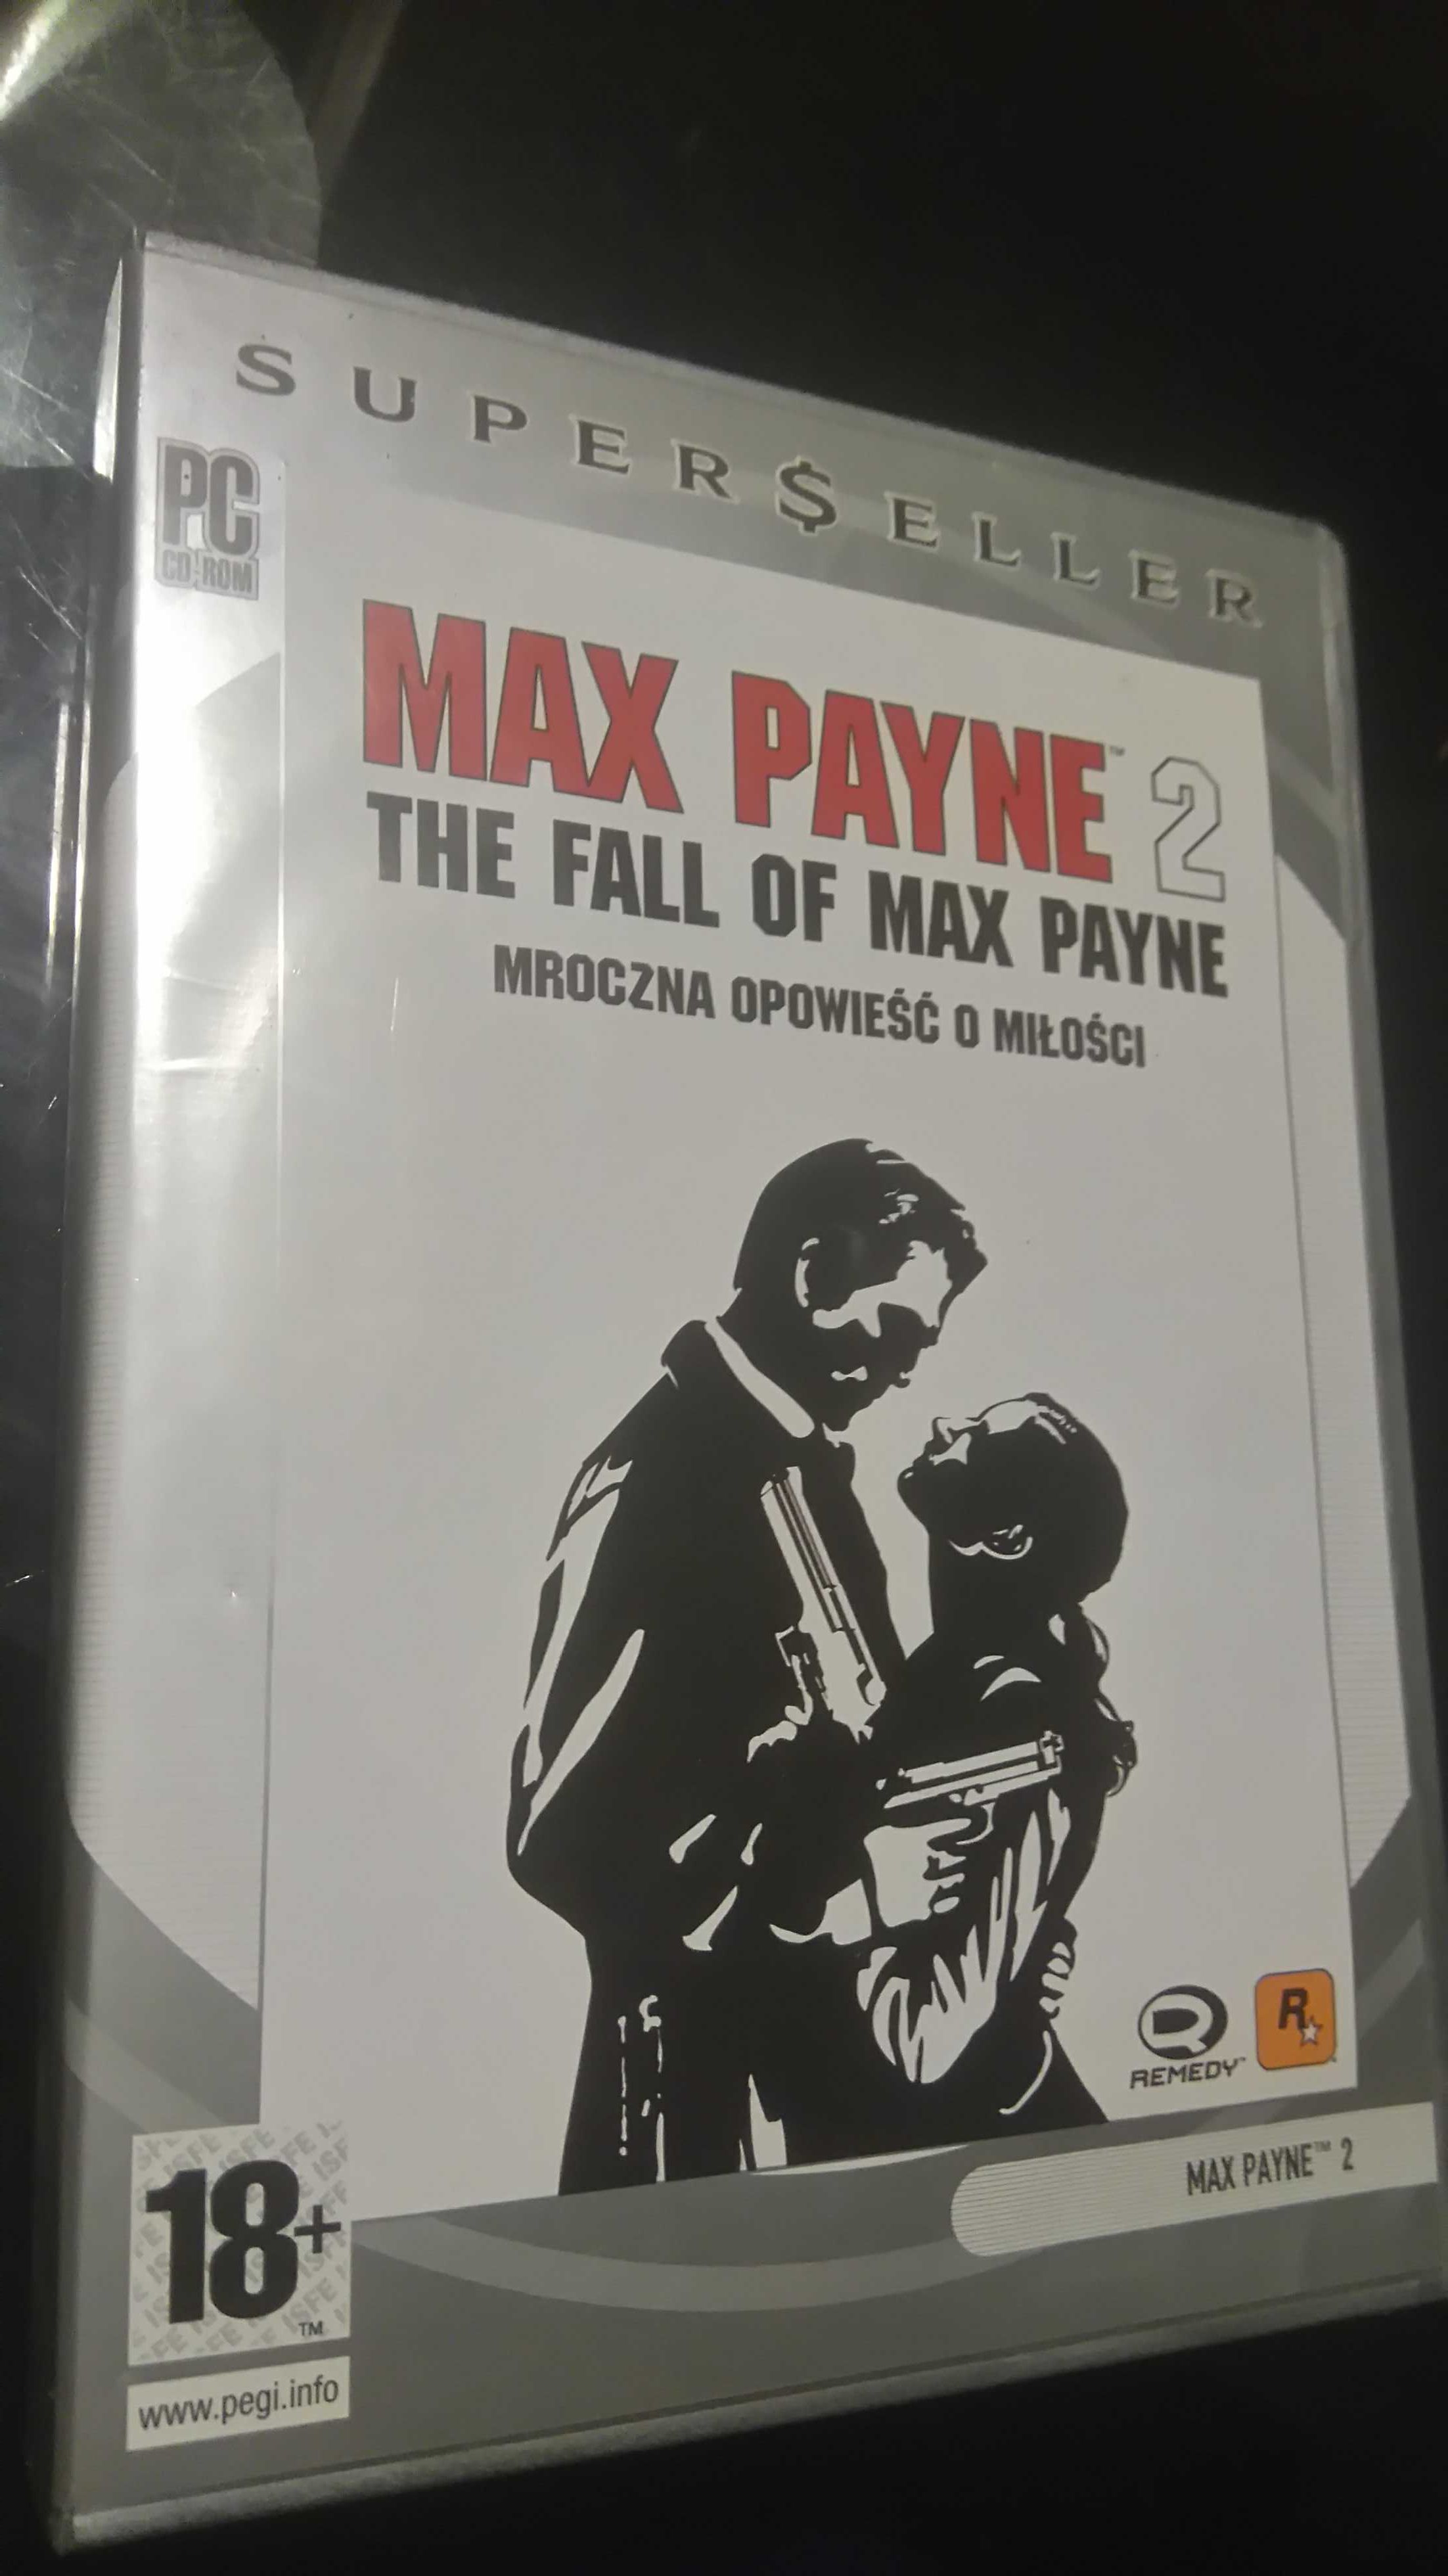 Max Payne2-the fall of Max Payne gra pc,pl